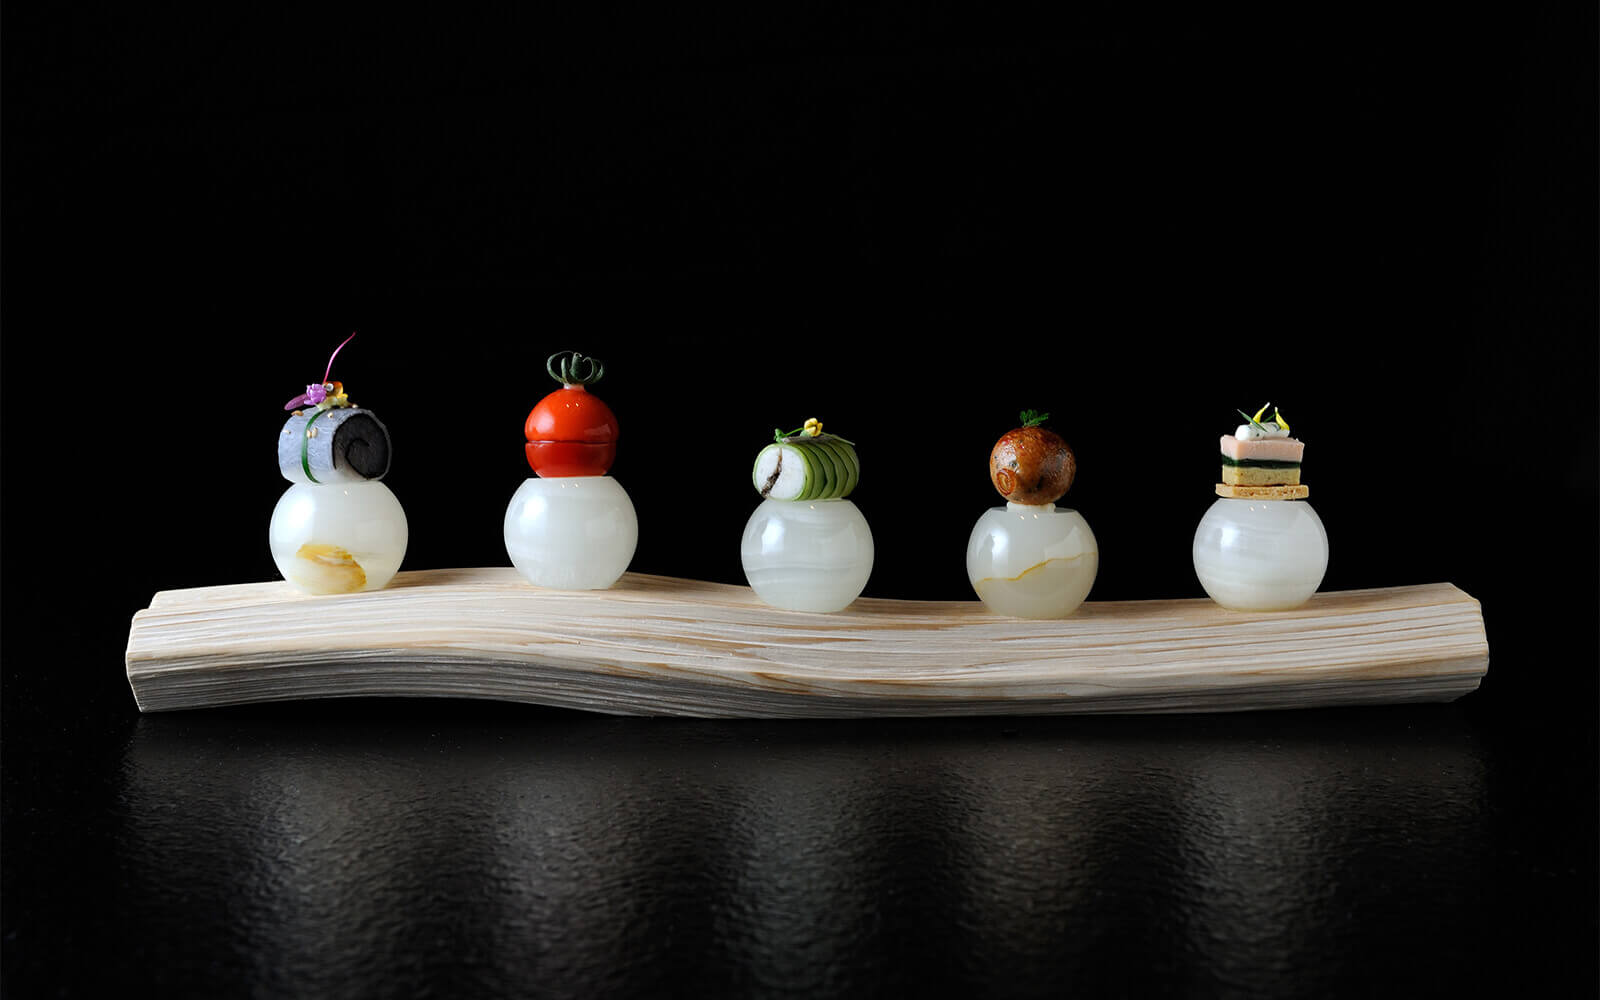 Chef Hamada’s masterpiece Five Flavors of Delight